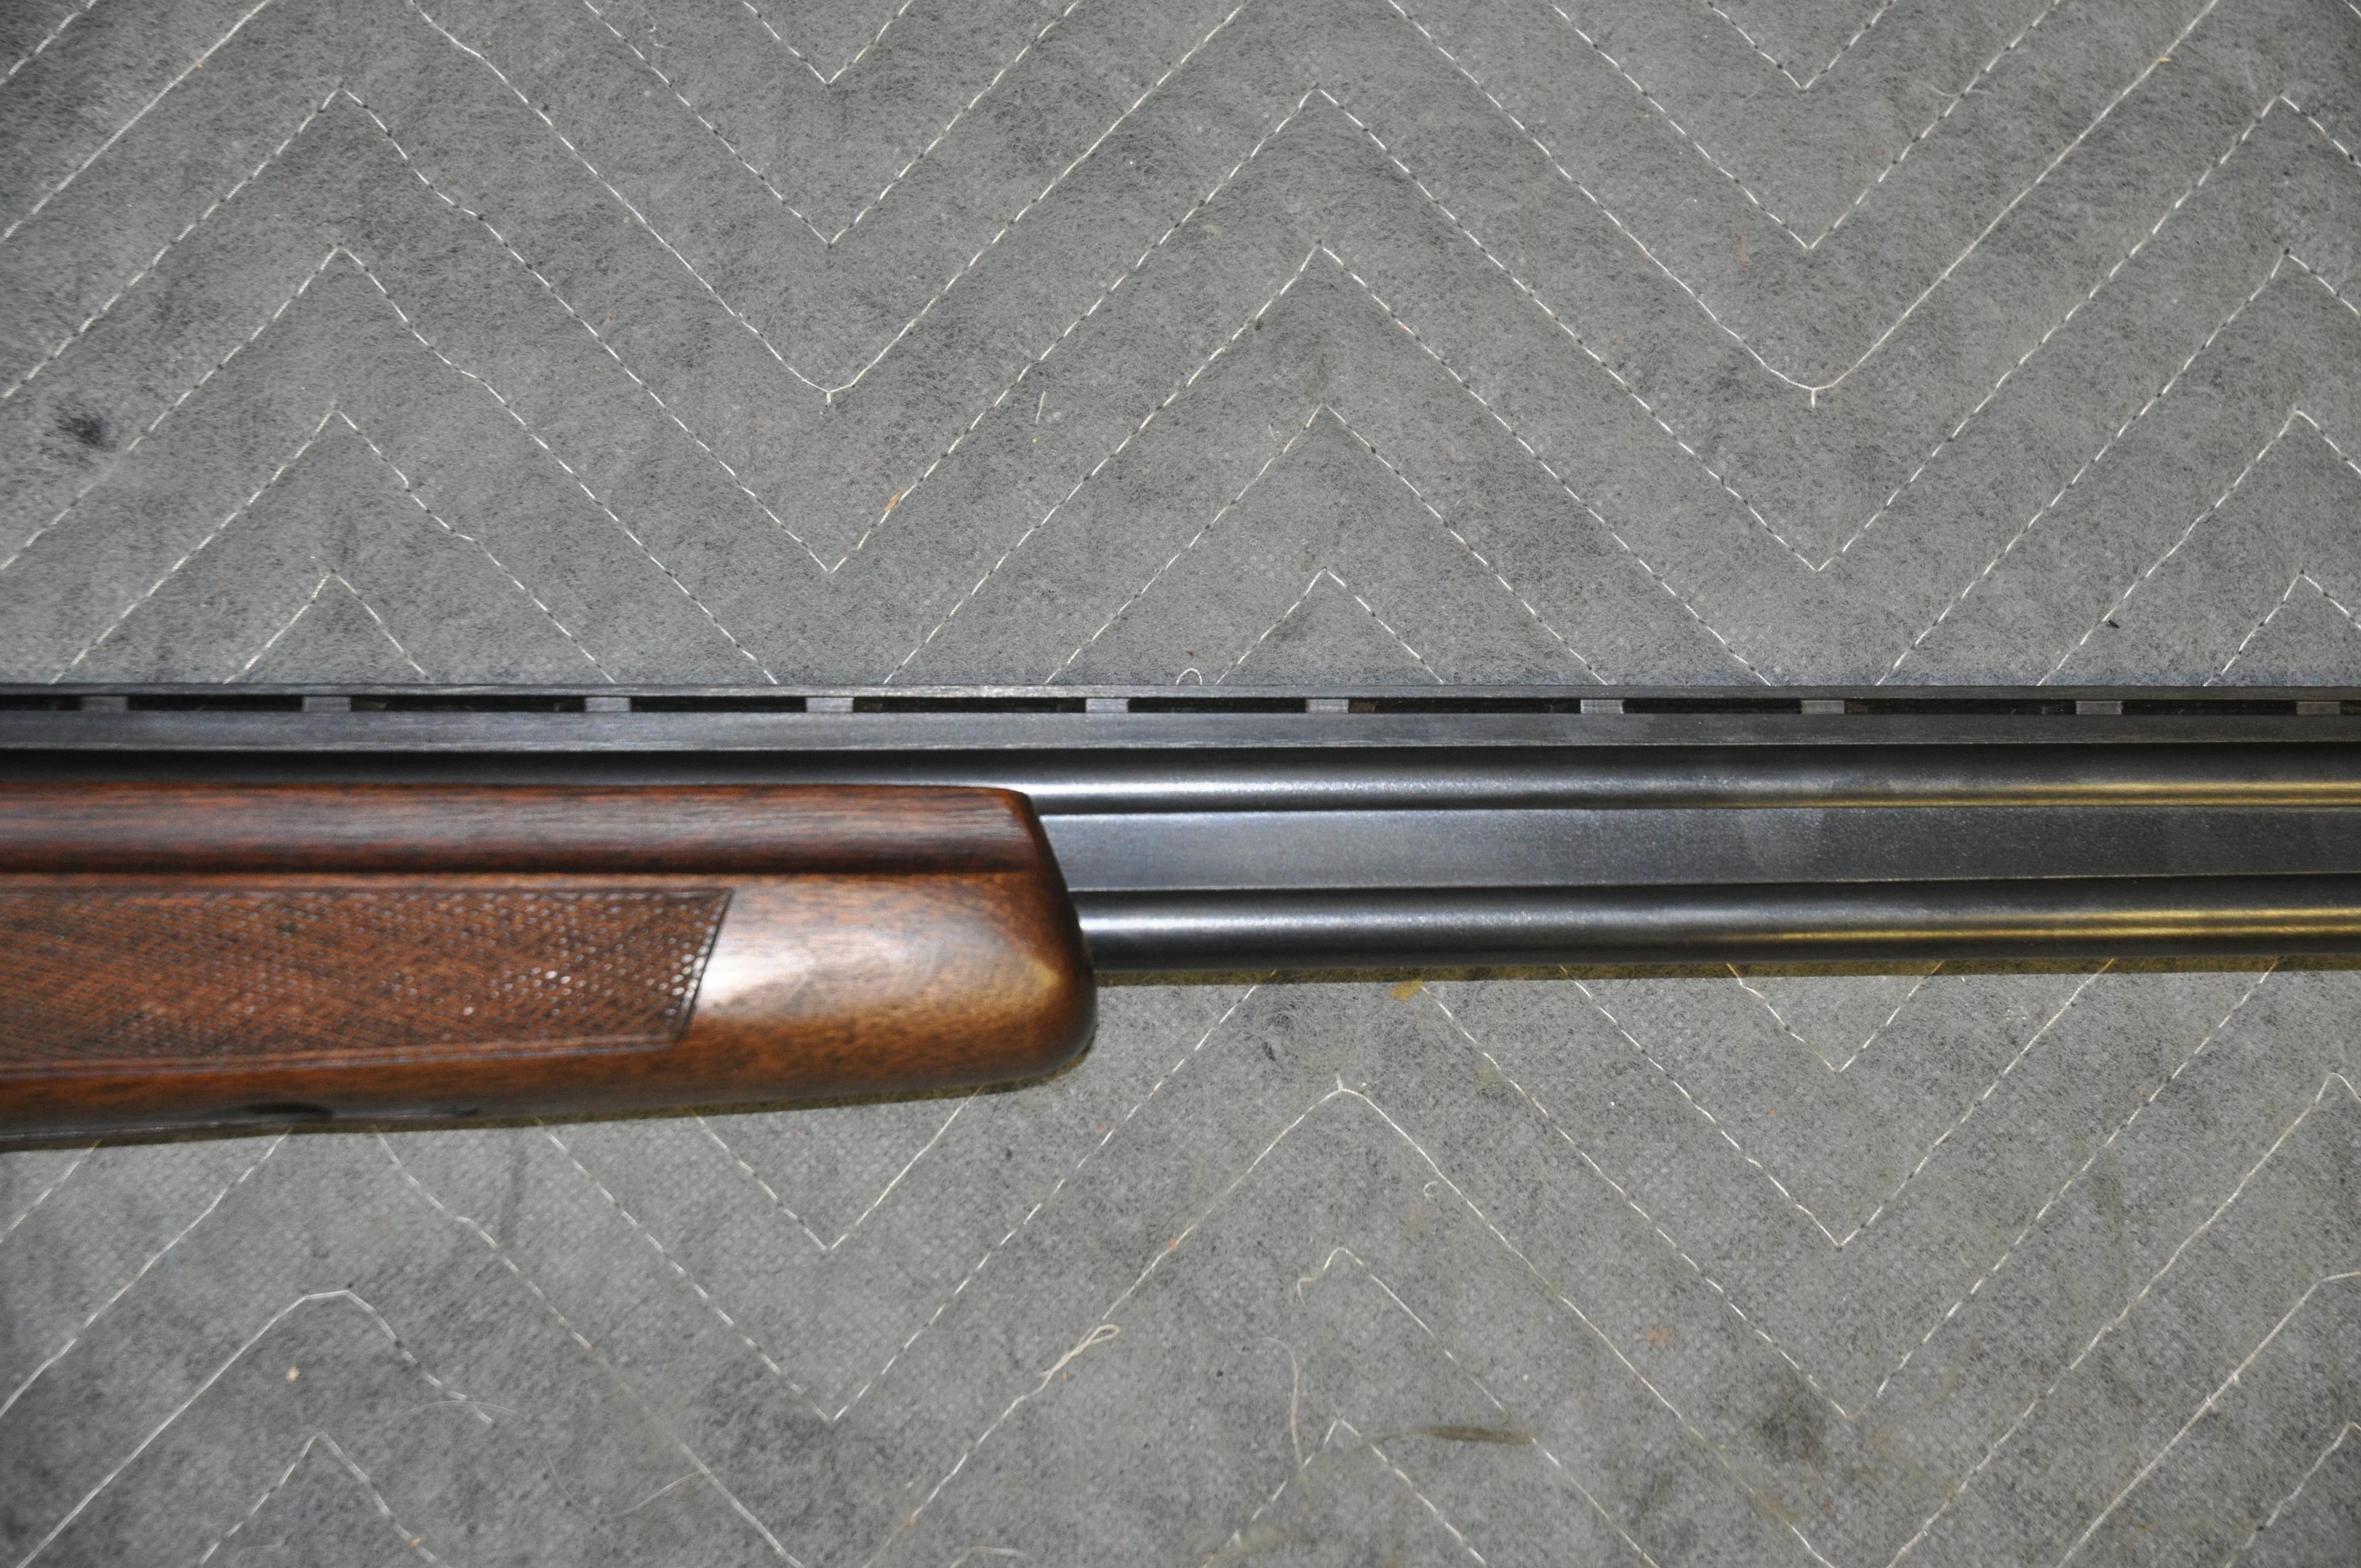 Baikal/Remington SPR 310